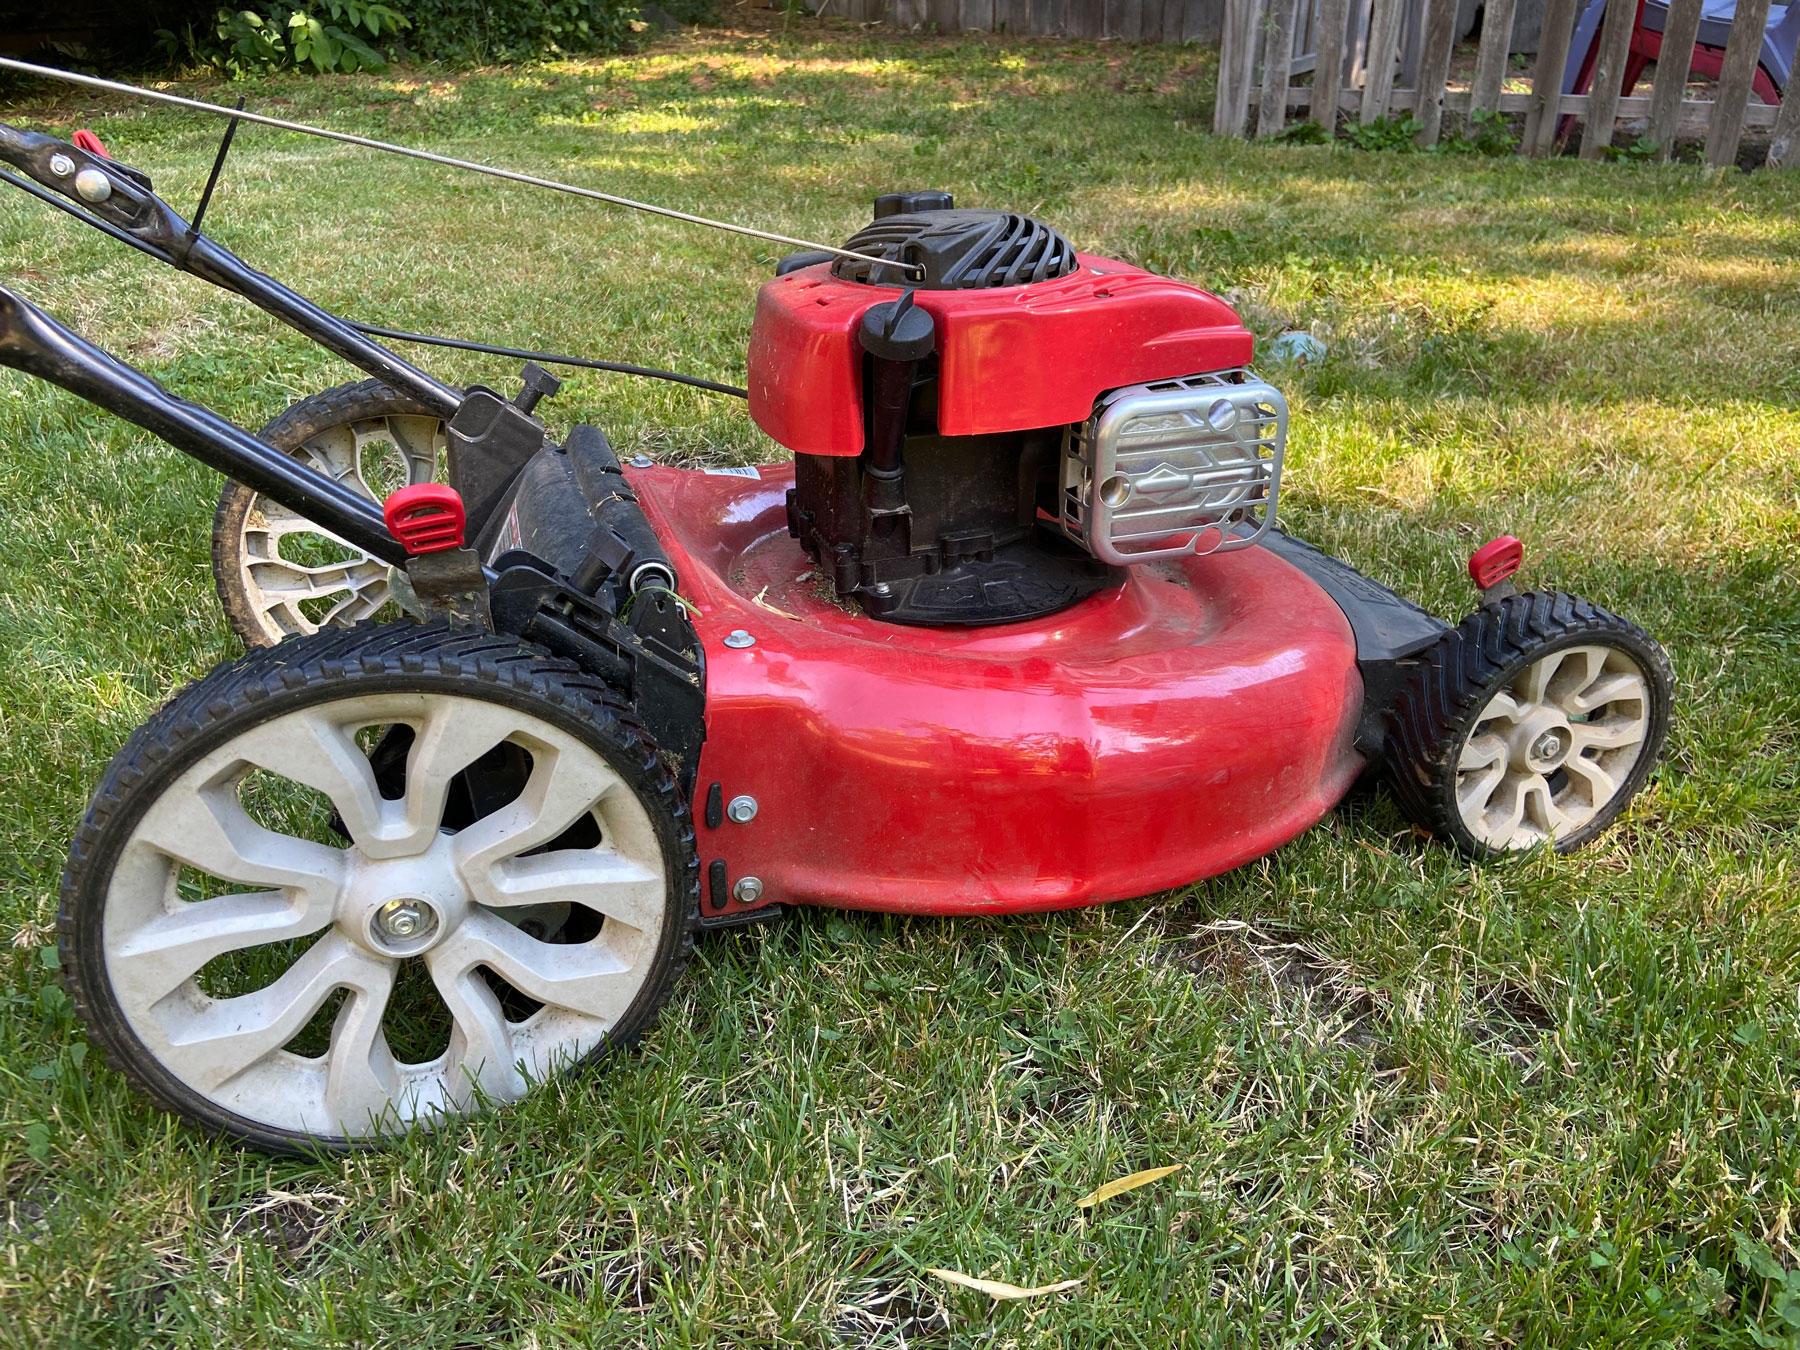 A red lawn mower sitting on fresh-cut green grass.